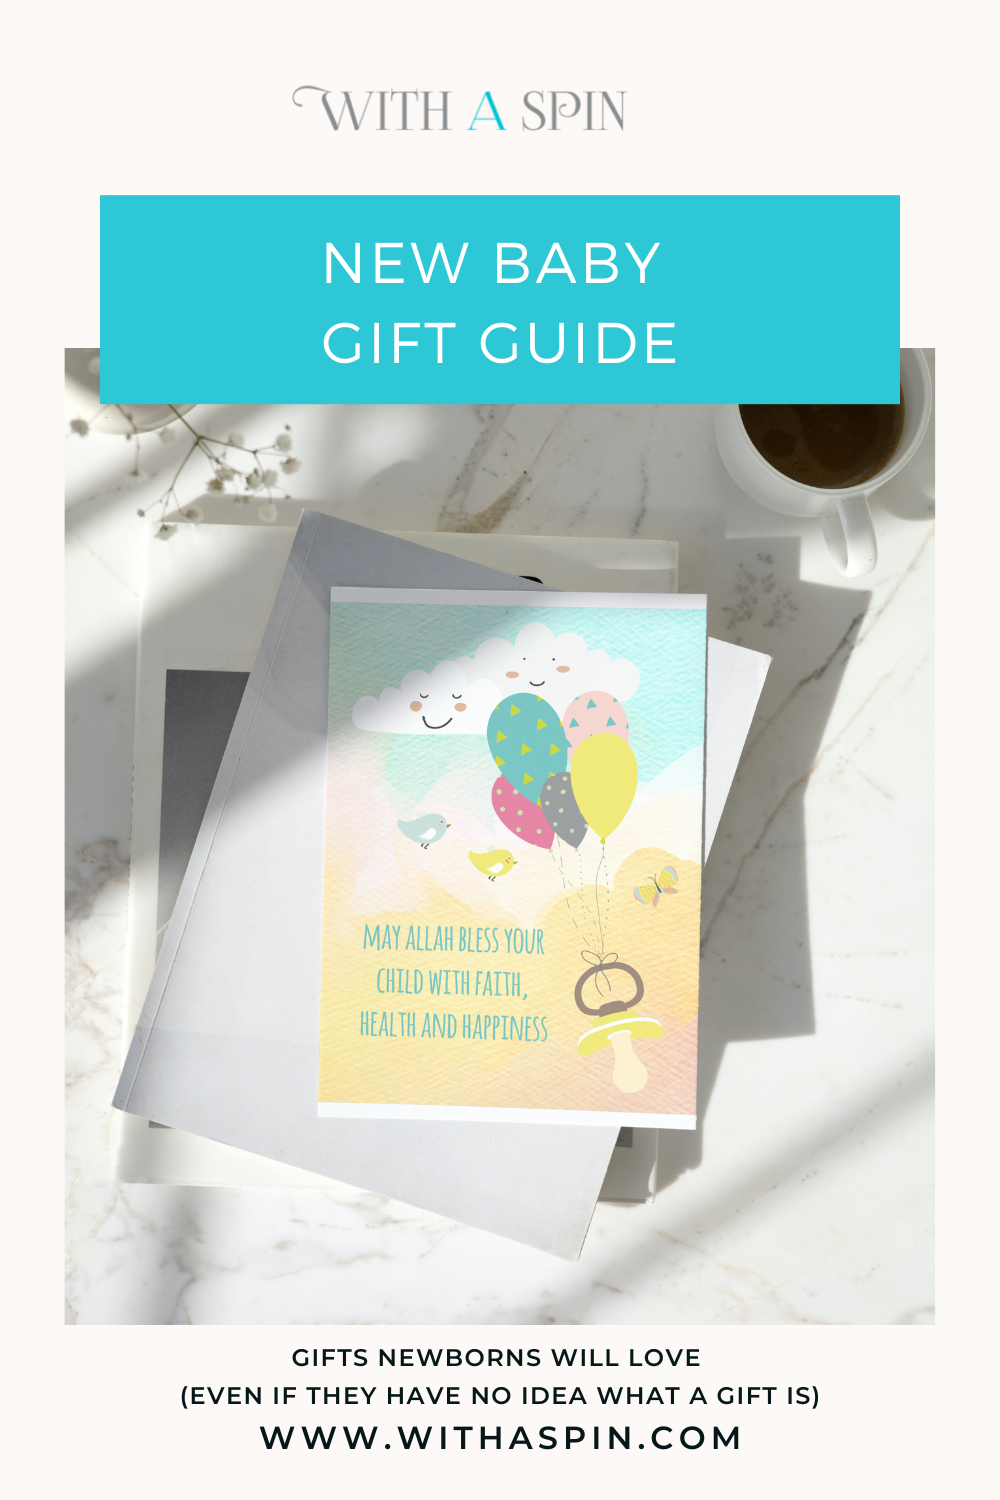 Aqiqa gift guide - Muslim baby gift ideas